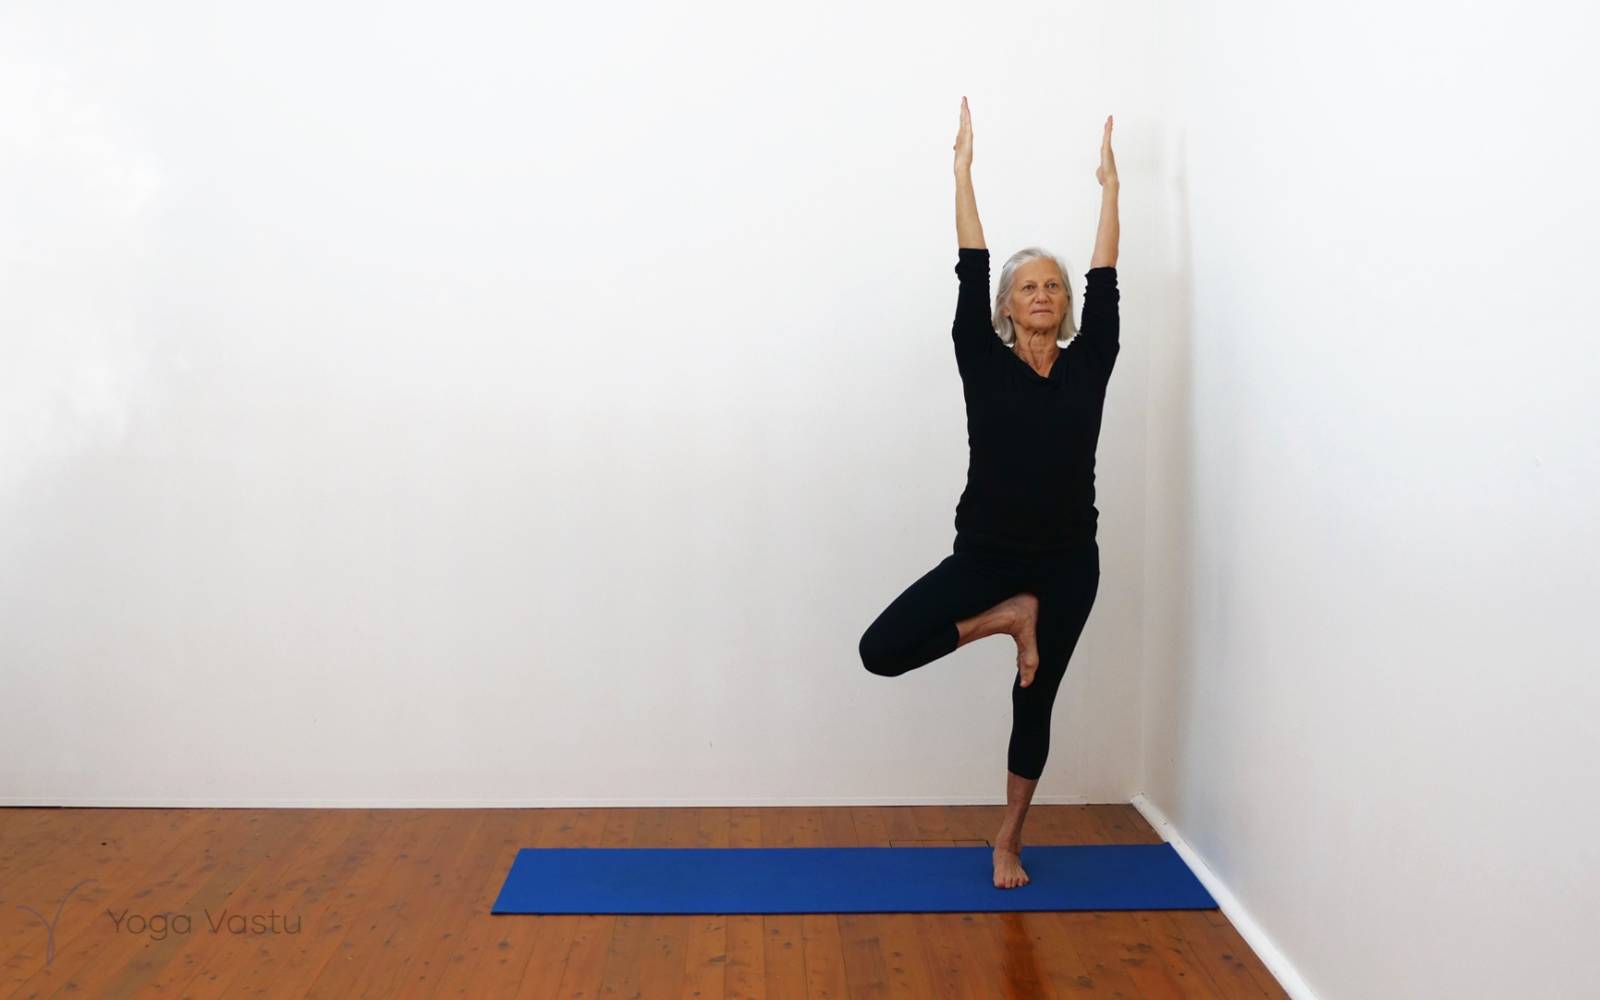 5 Yoga Poses to Challenge Your Balance – Chopra